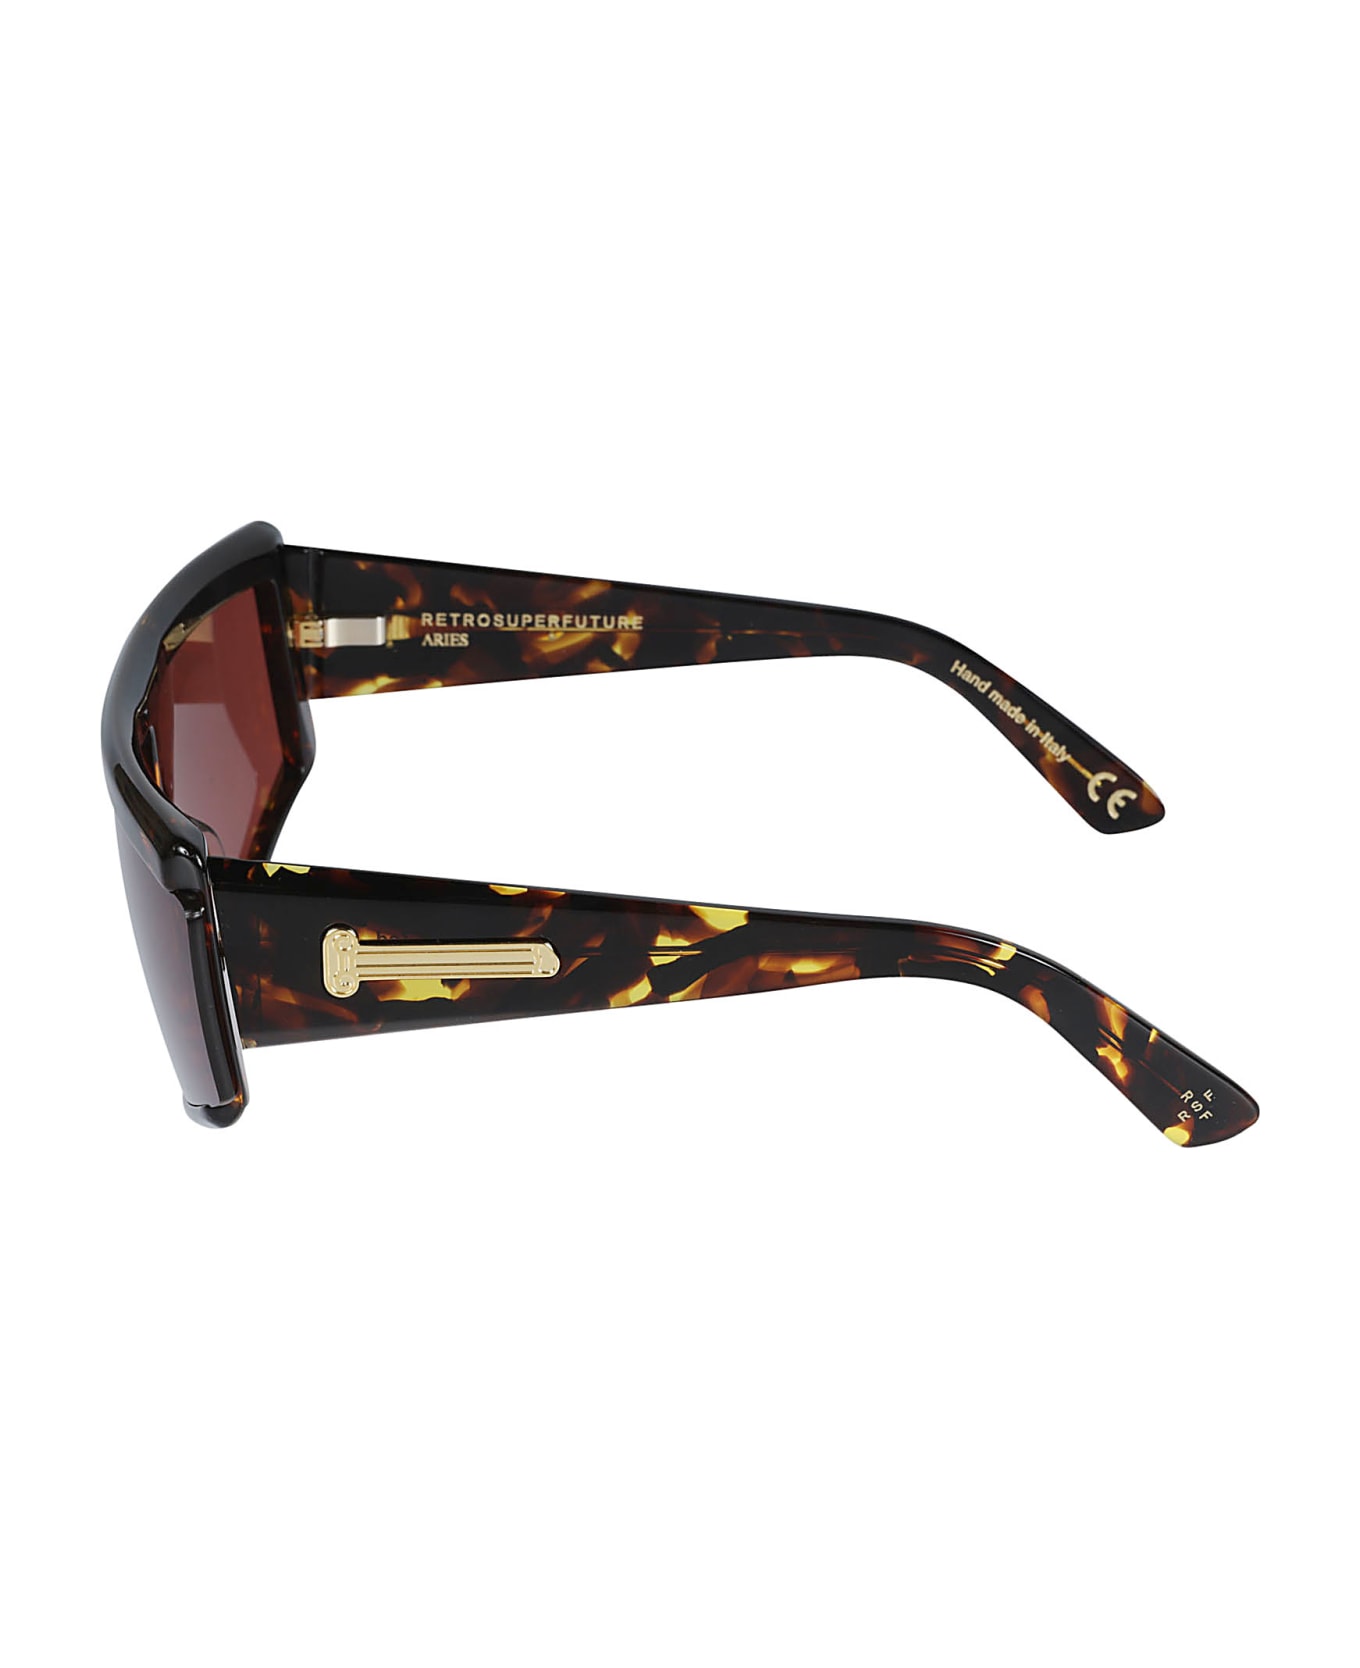 RETROSUPERFUTURE Aries Zed Sunglasses - Havana